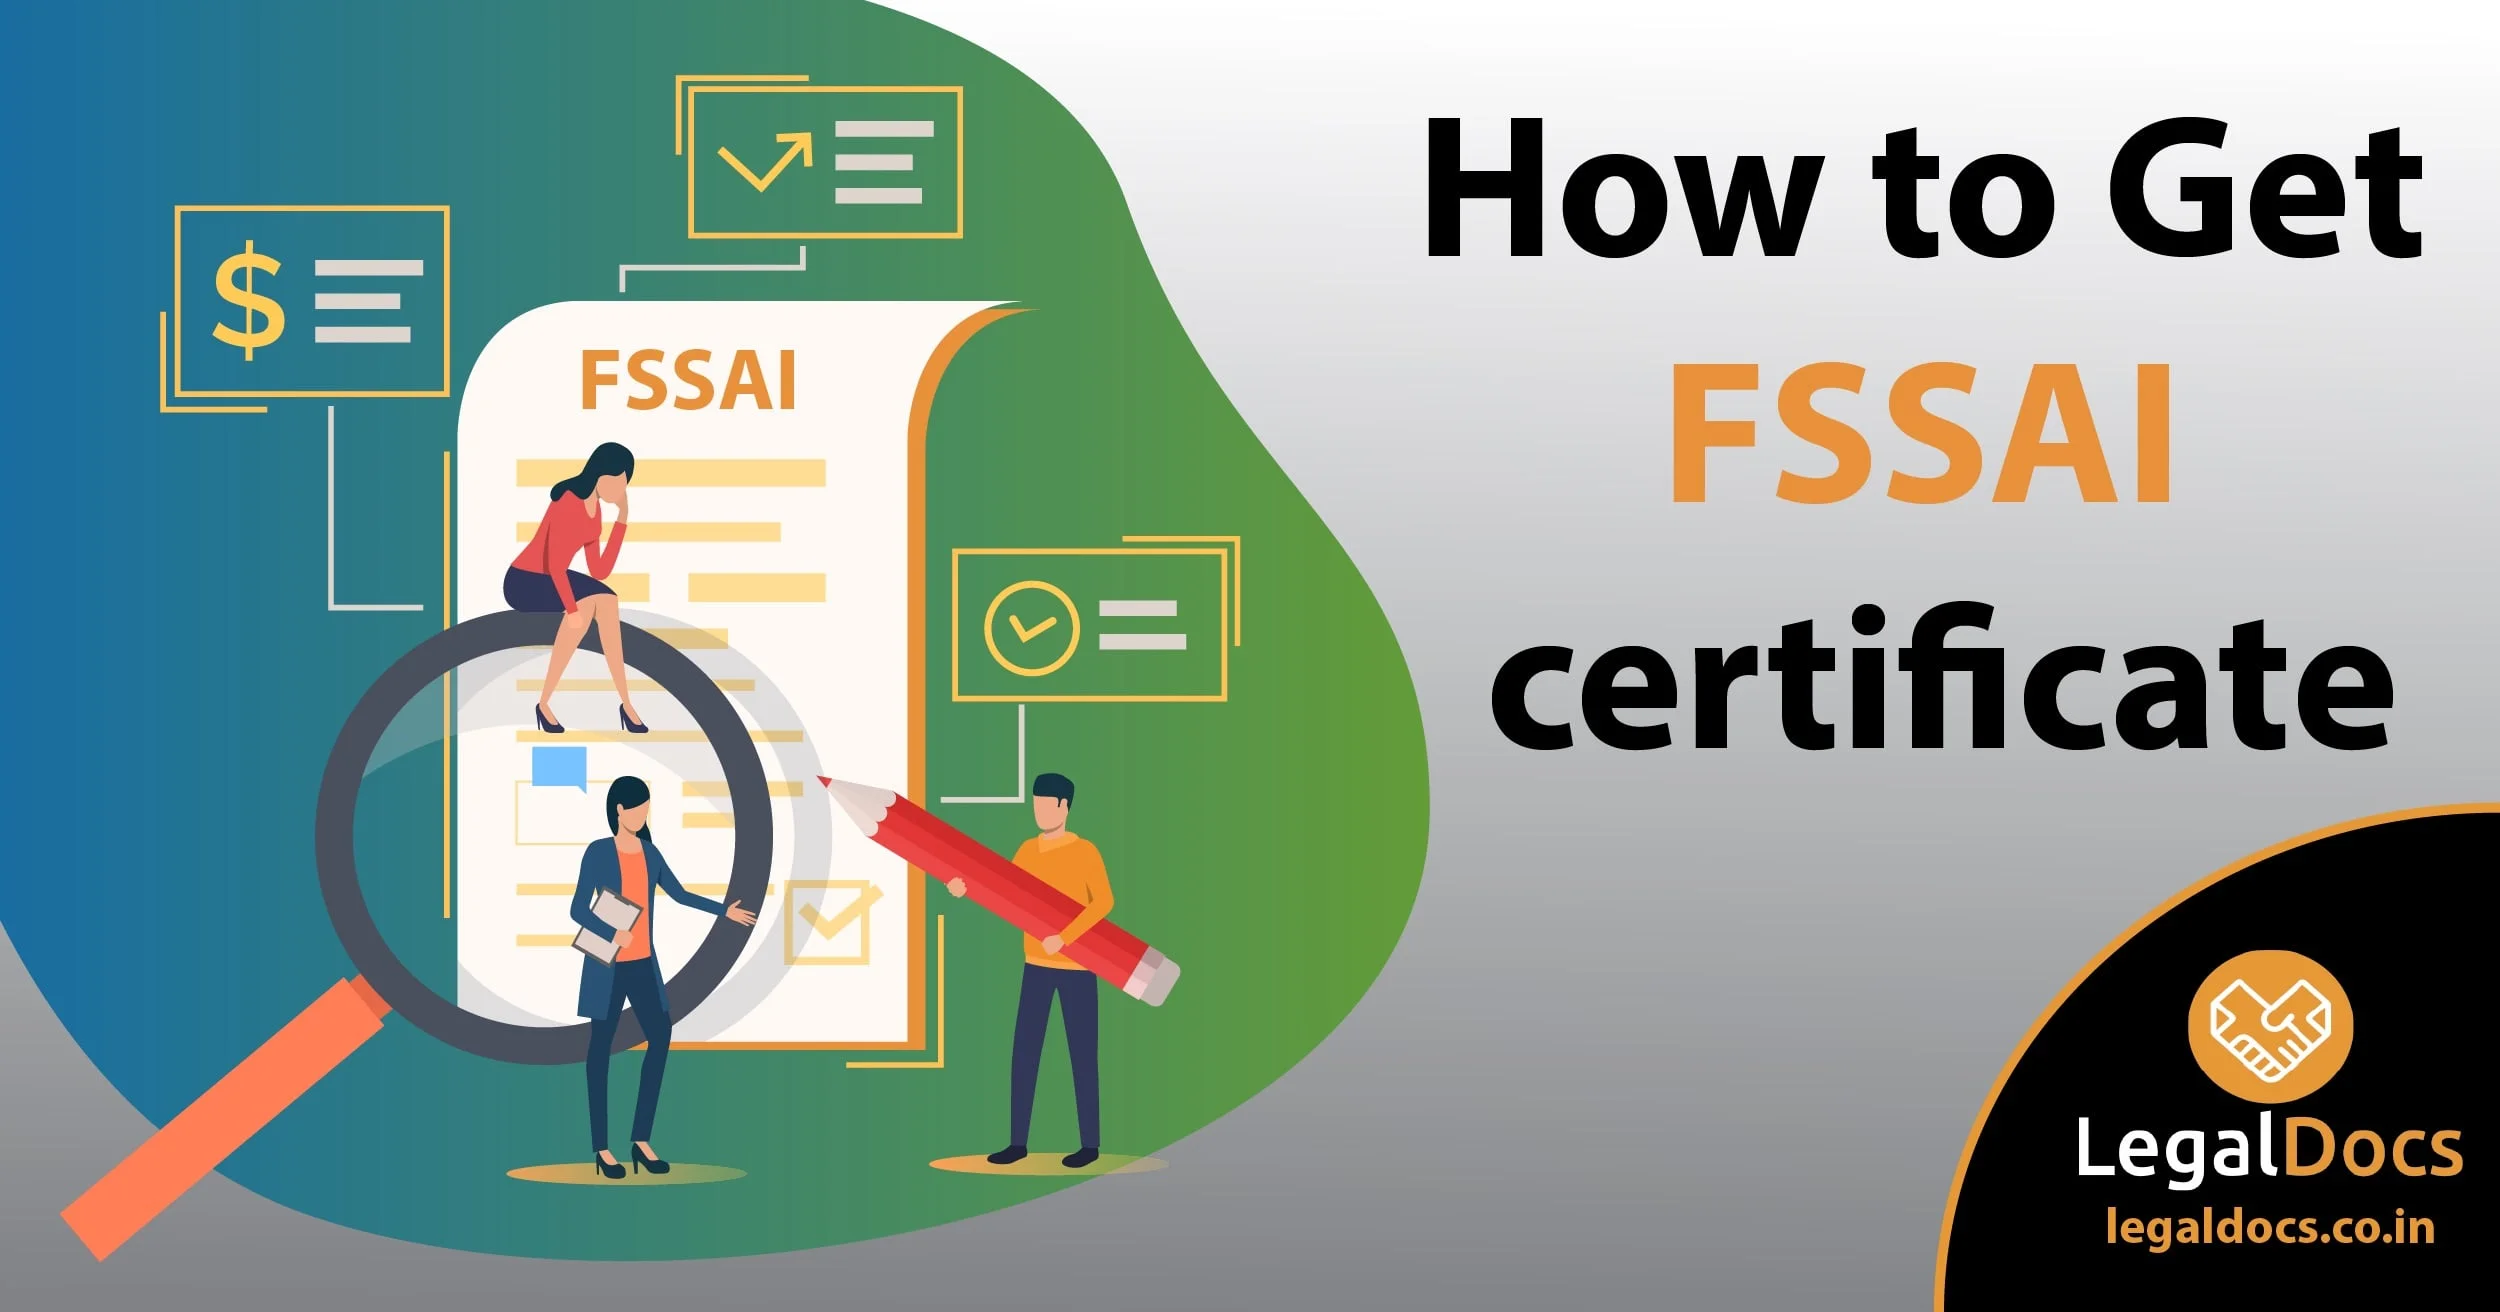 How to Get FSSAI Certificate